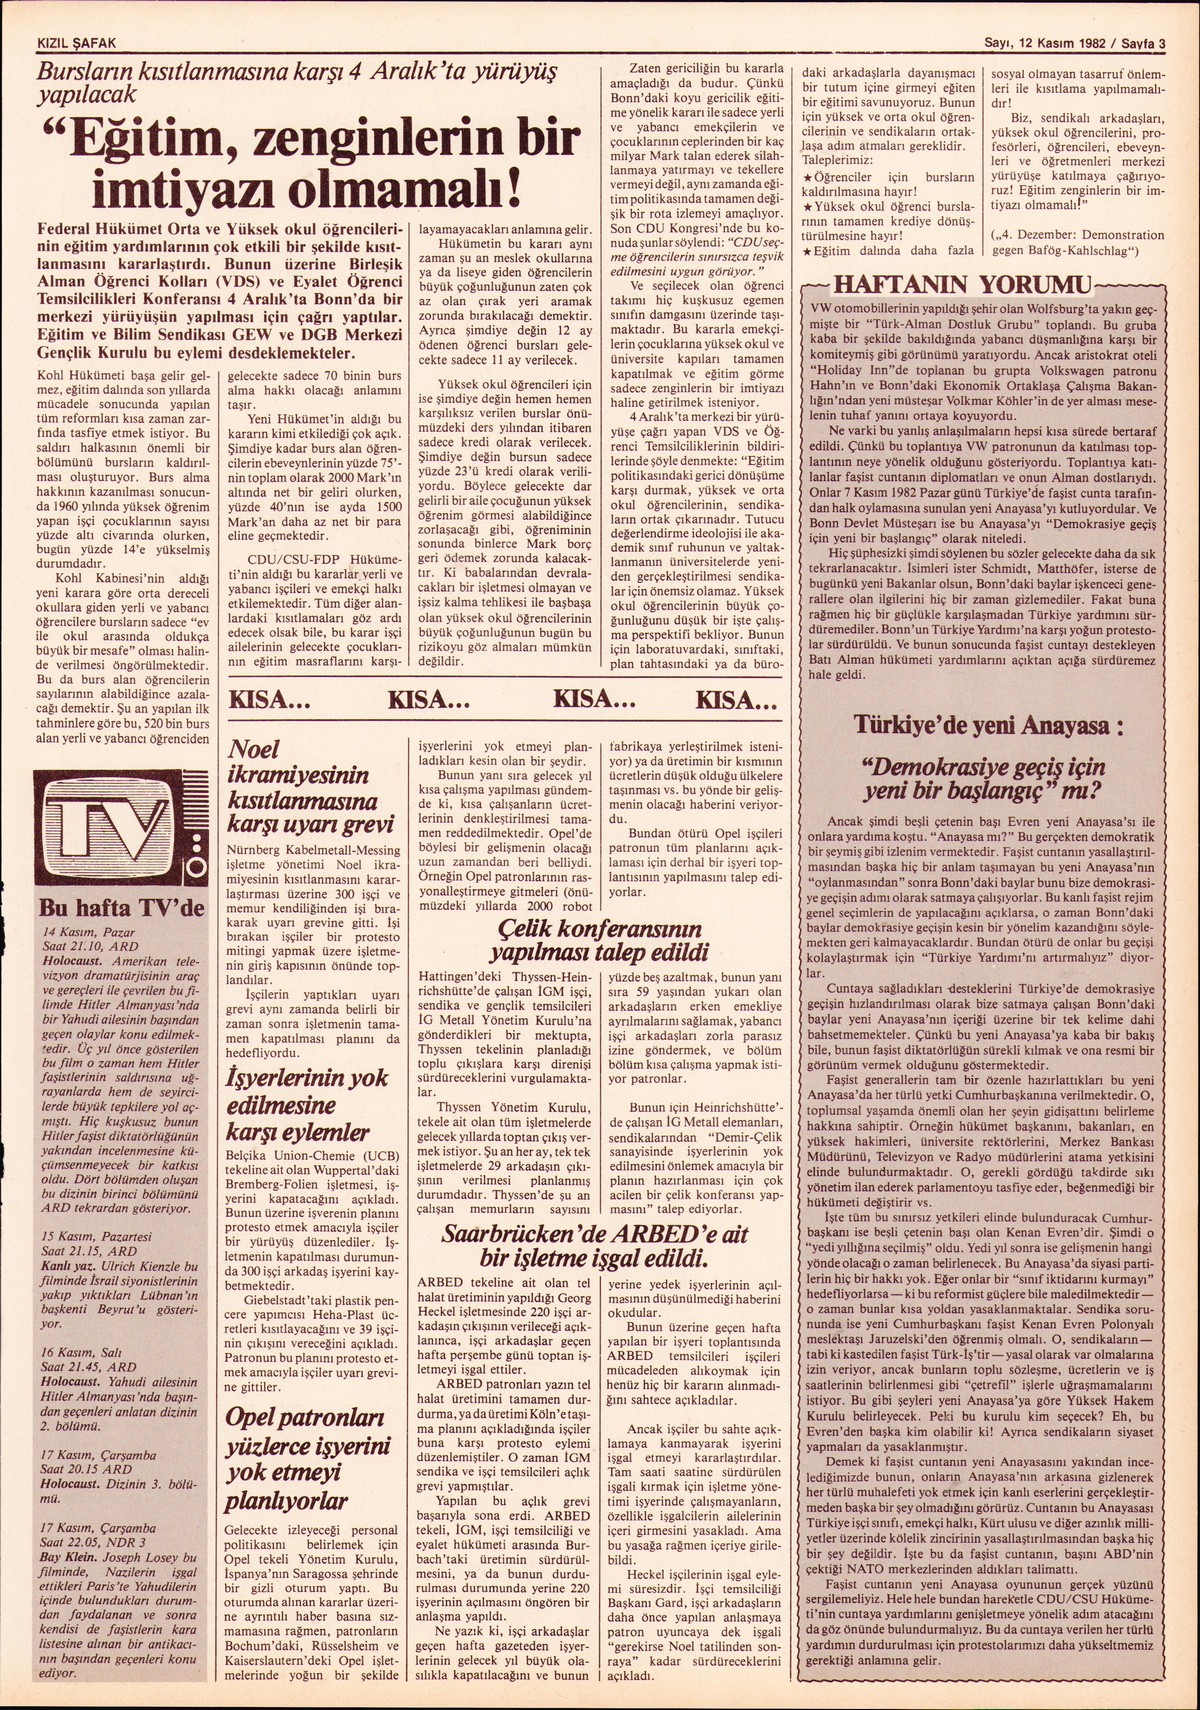 Roter Morgen, 16. Jg., 12. November 1982, Nr. 45, Seite 16